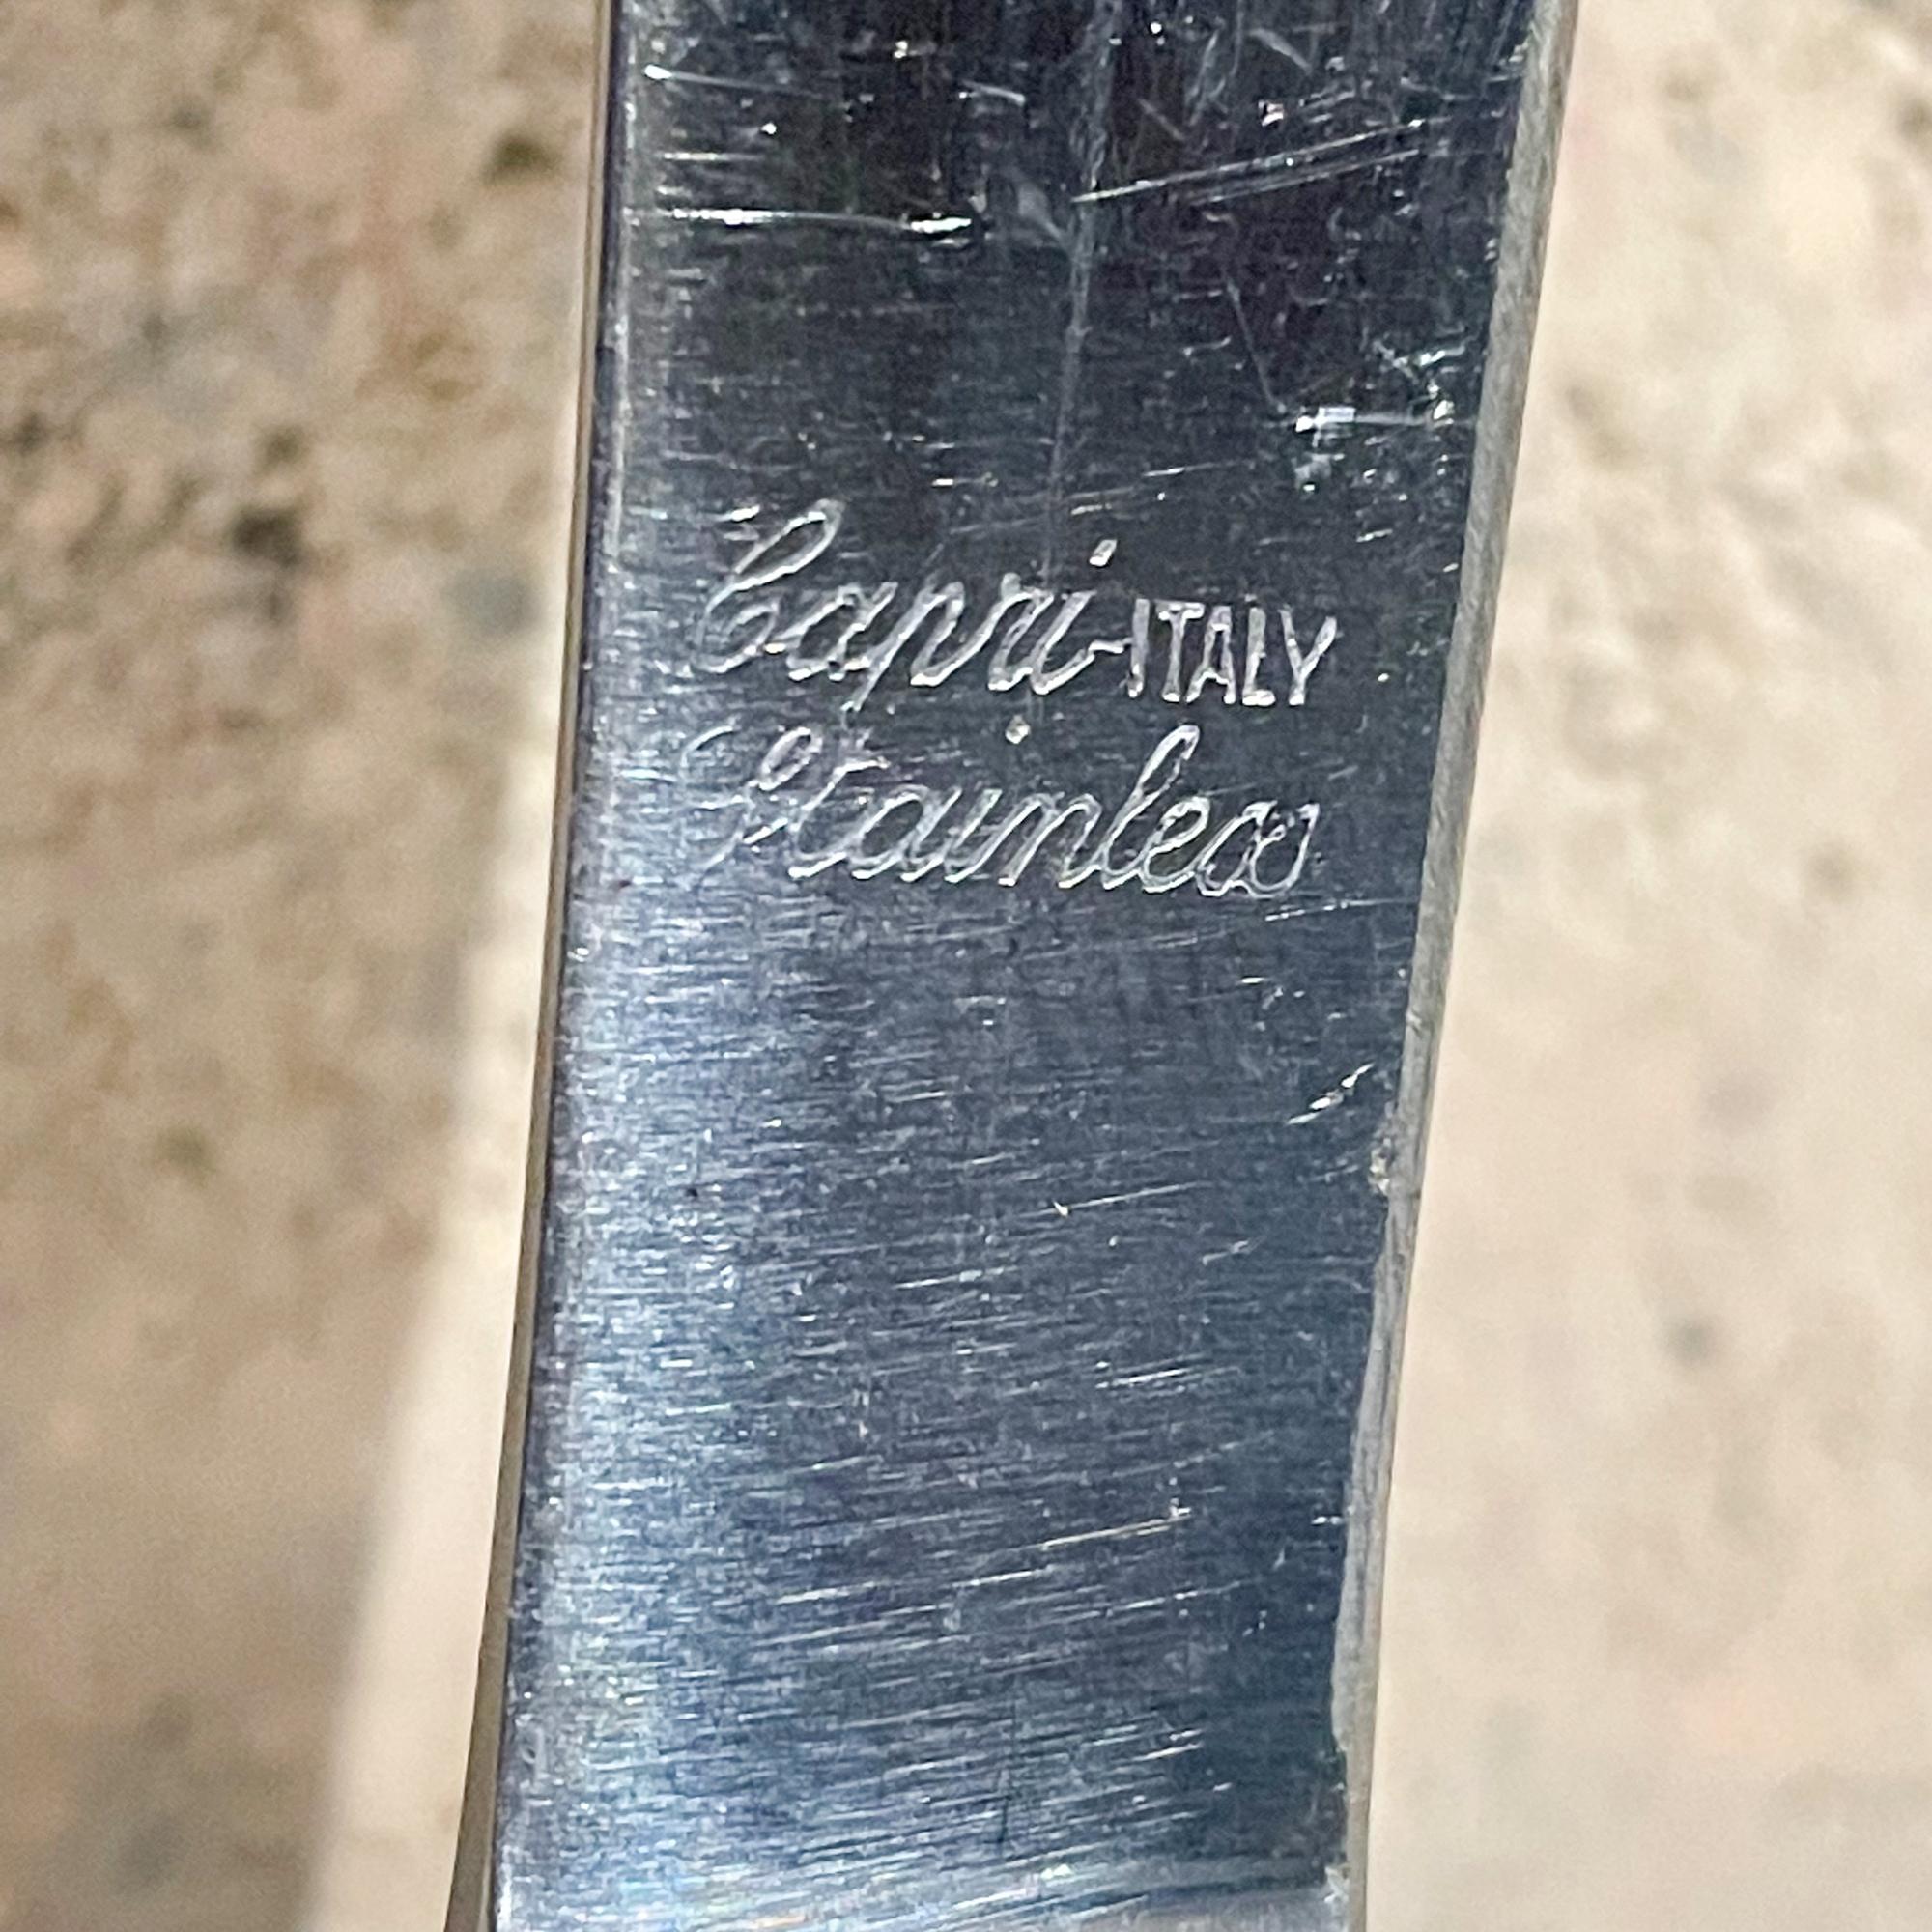 capri stainless italy